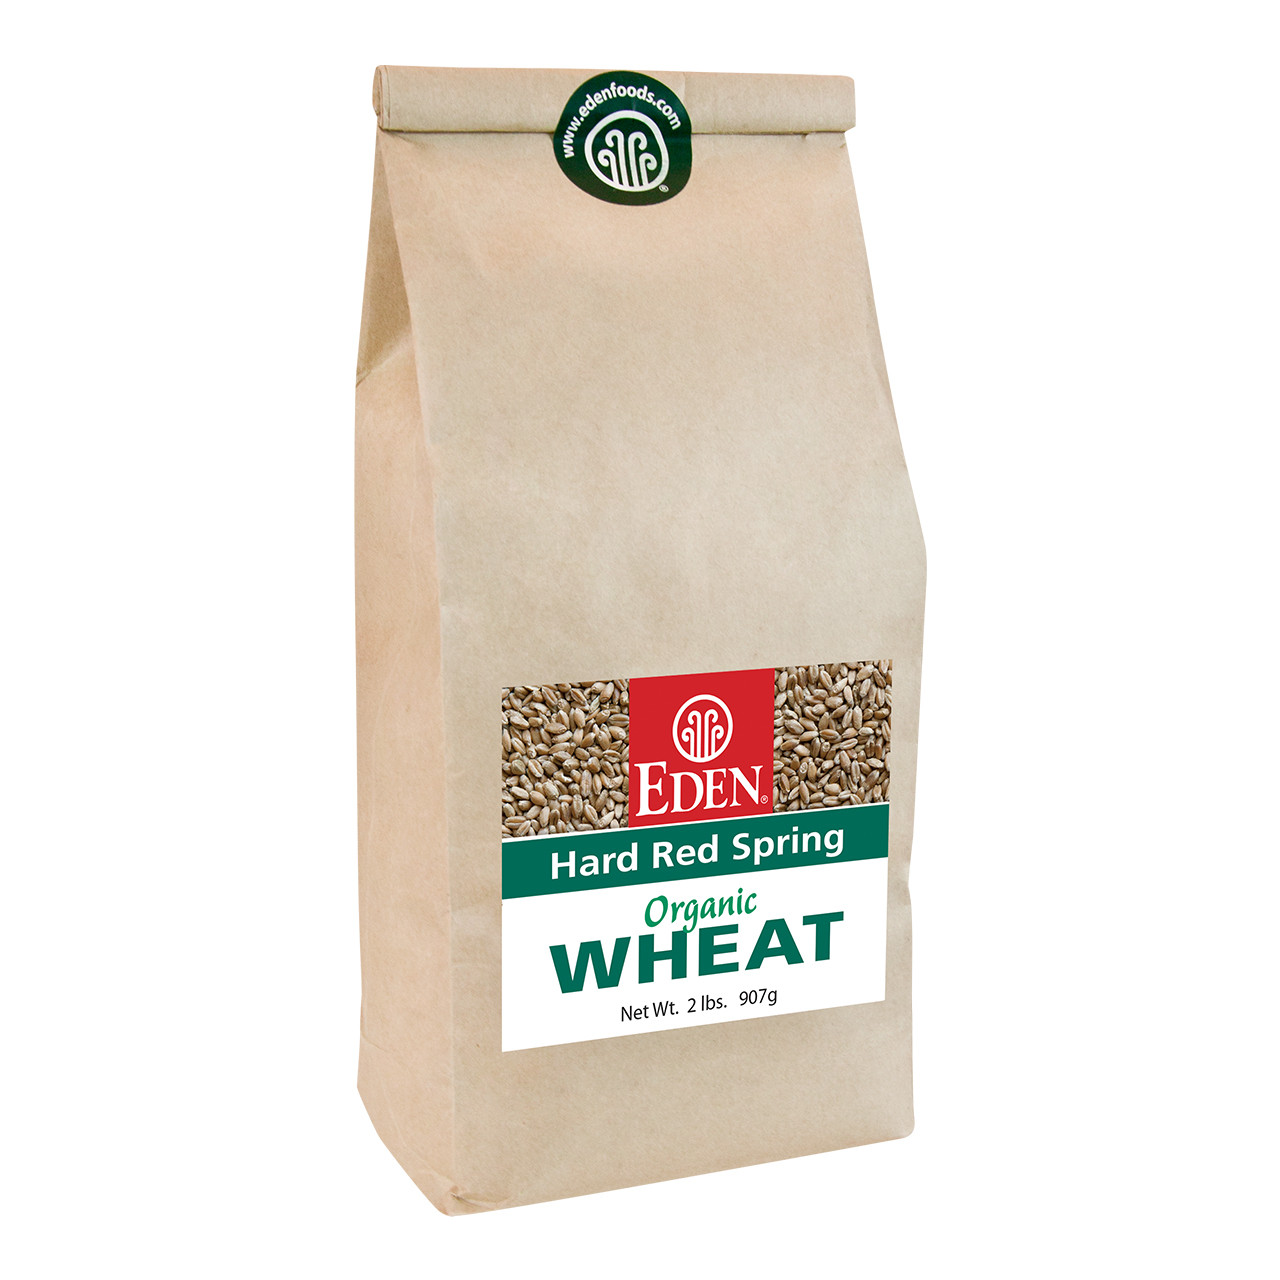 Hard Red Spring Wheat, Organic - 2 lb